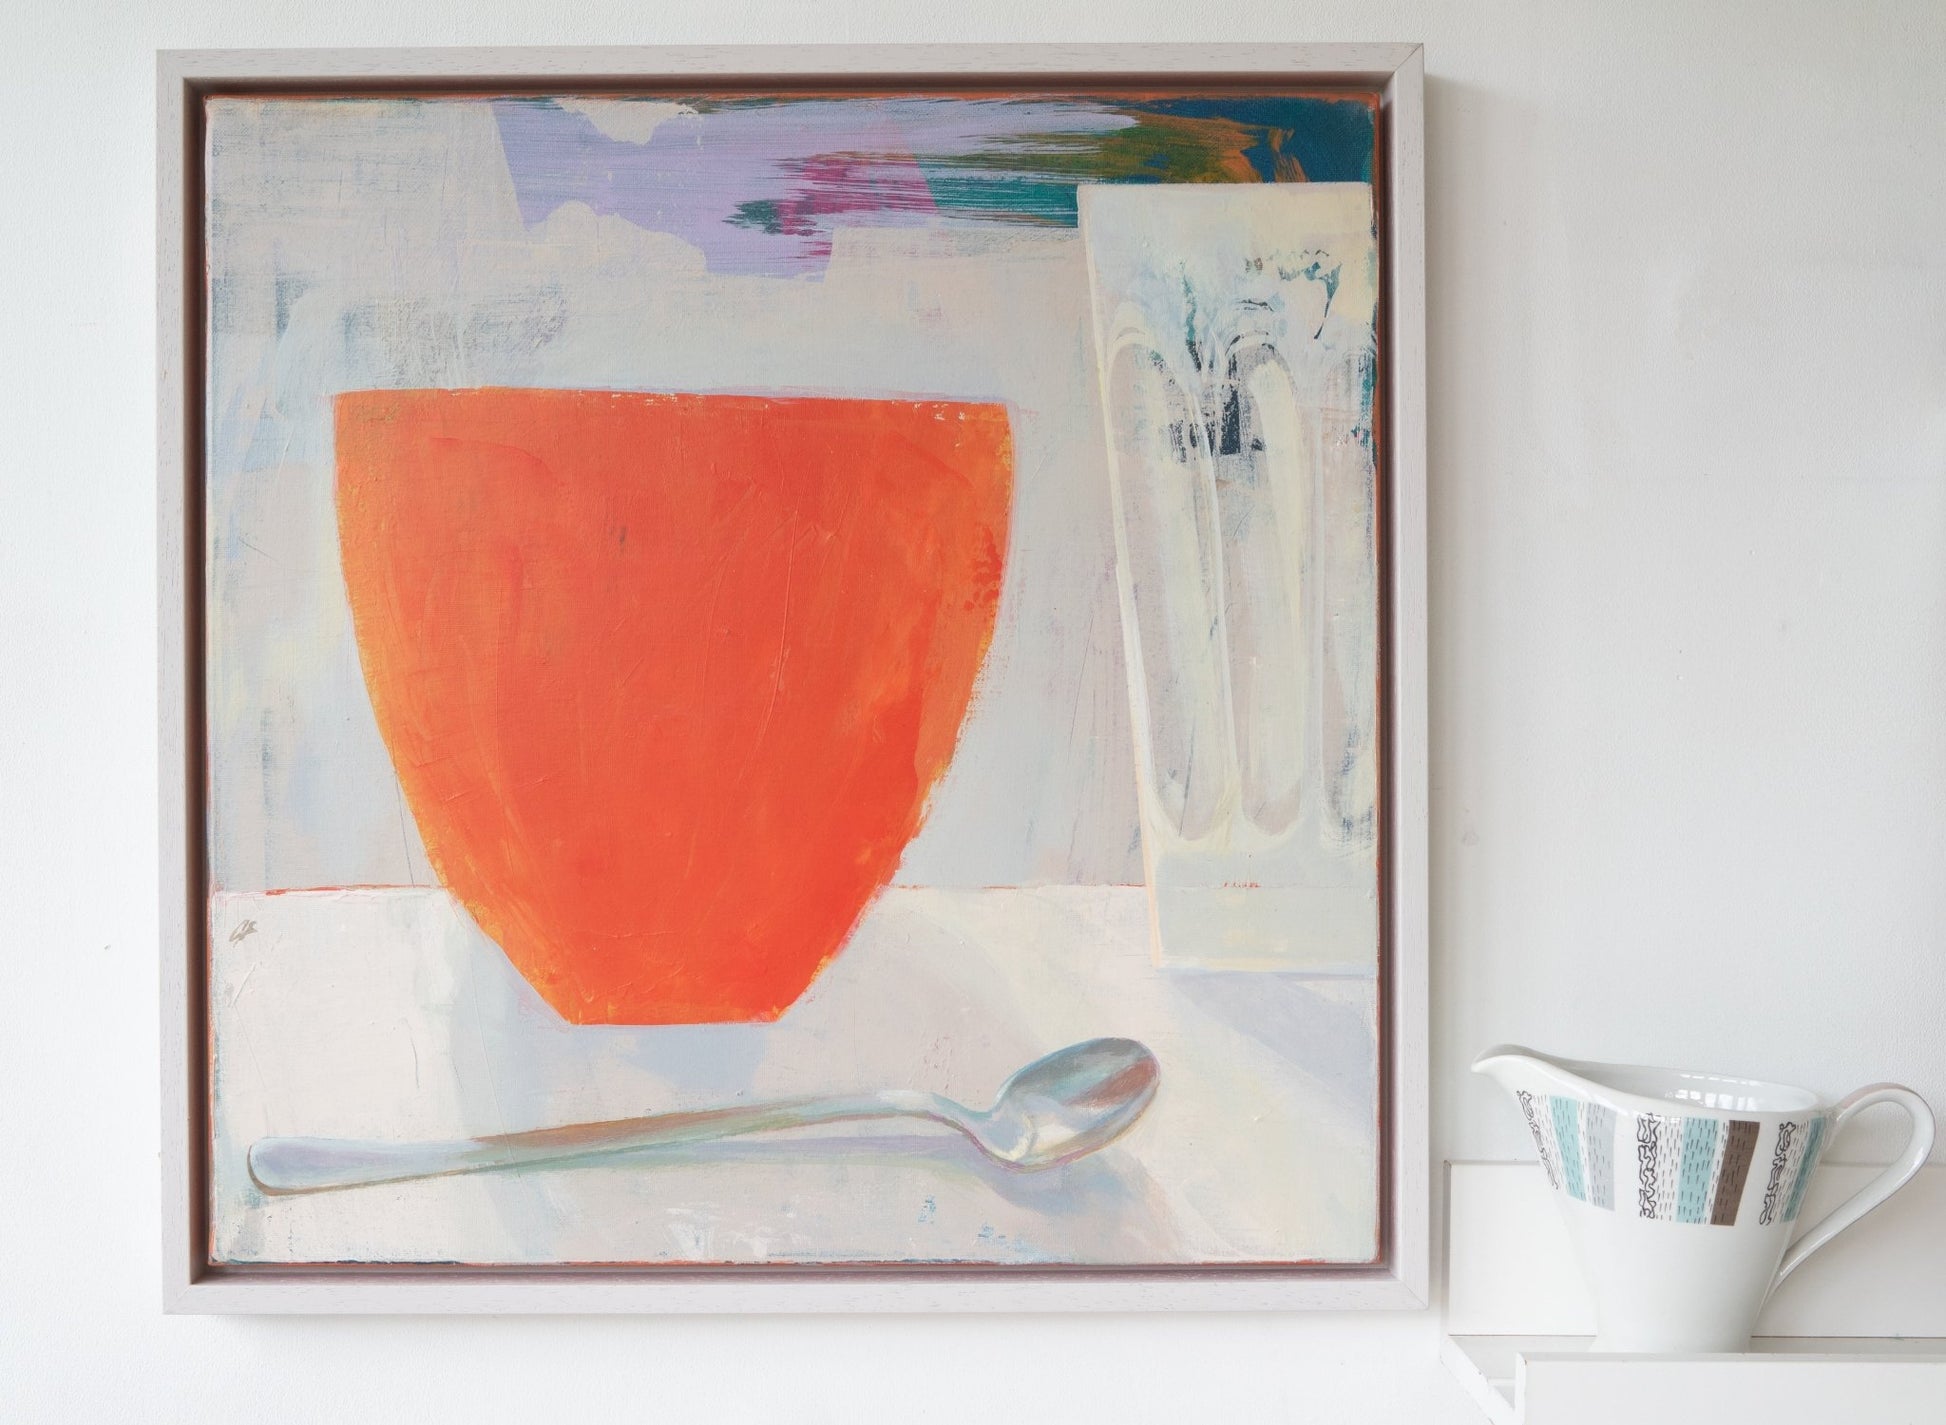 The Orange Bowl painting